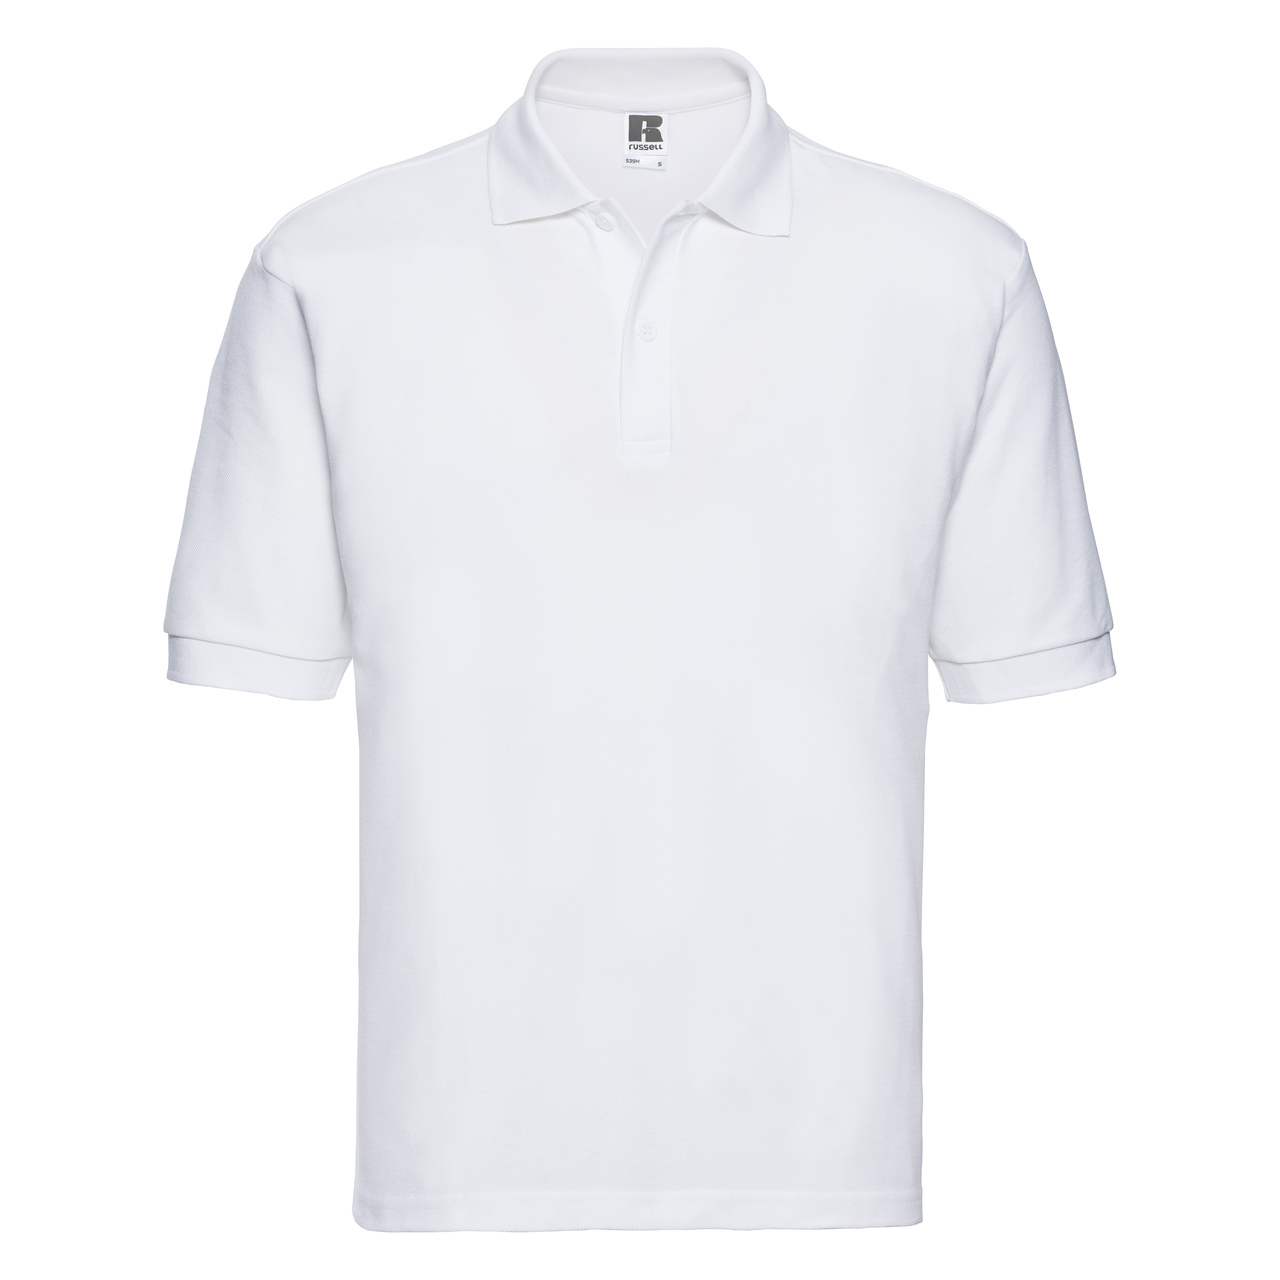 Koszulka męska Polycotton Polo R539M 65% polyester 35% bawełna ring-spun 210g/215g